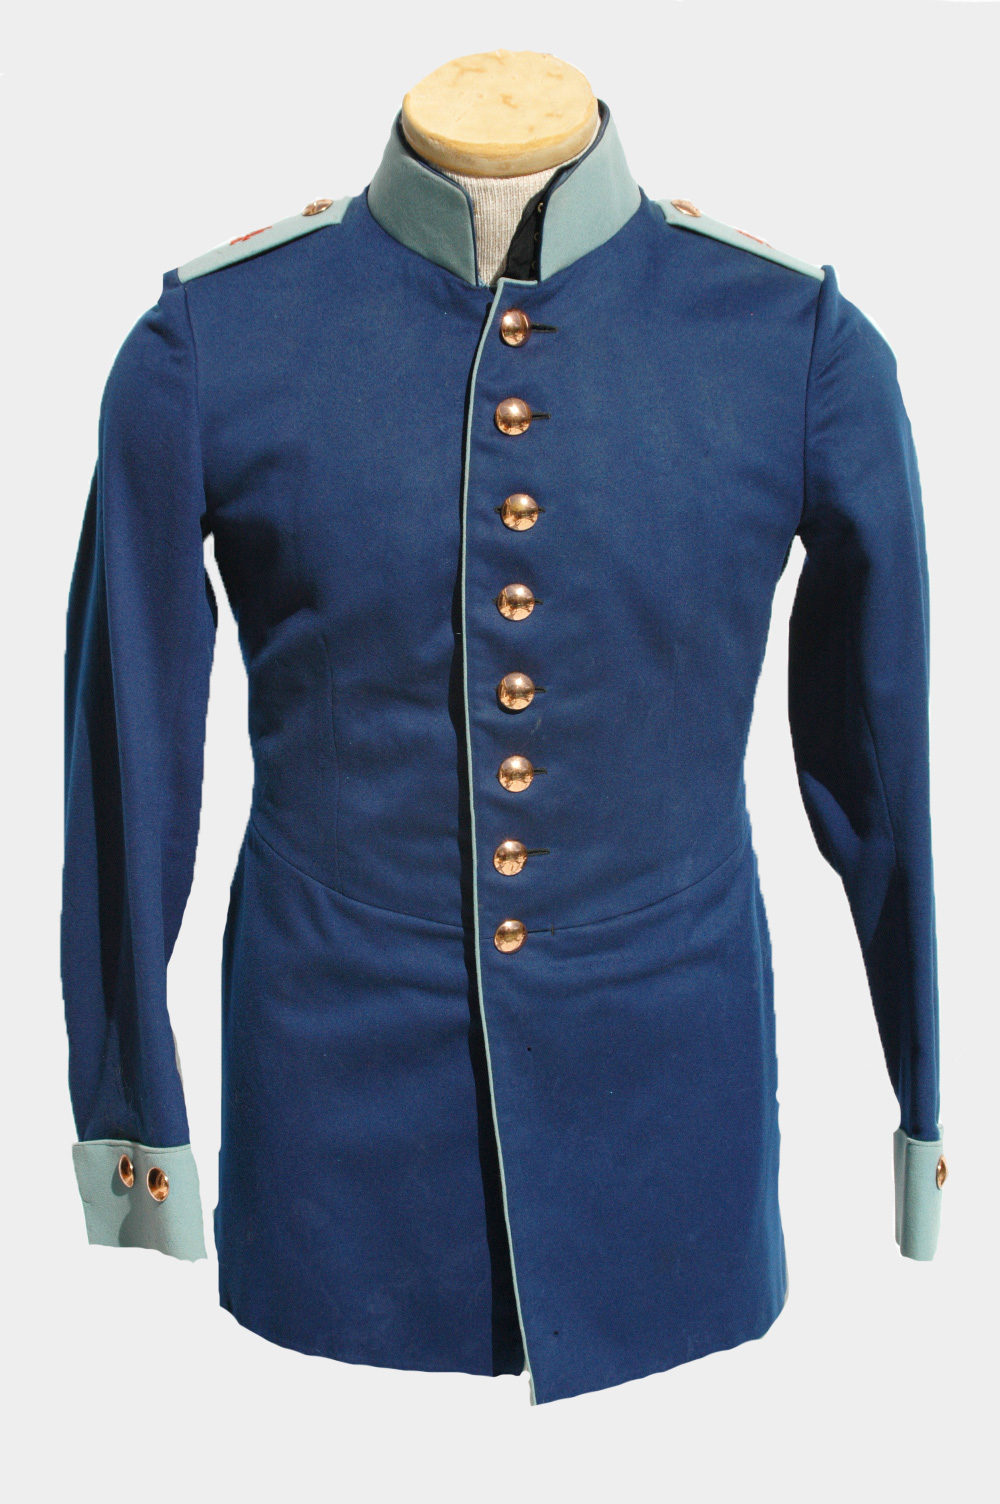 German Imperial uniform